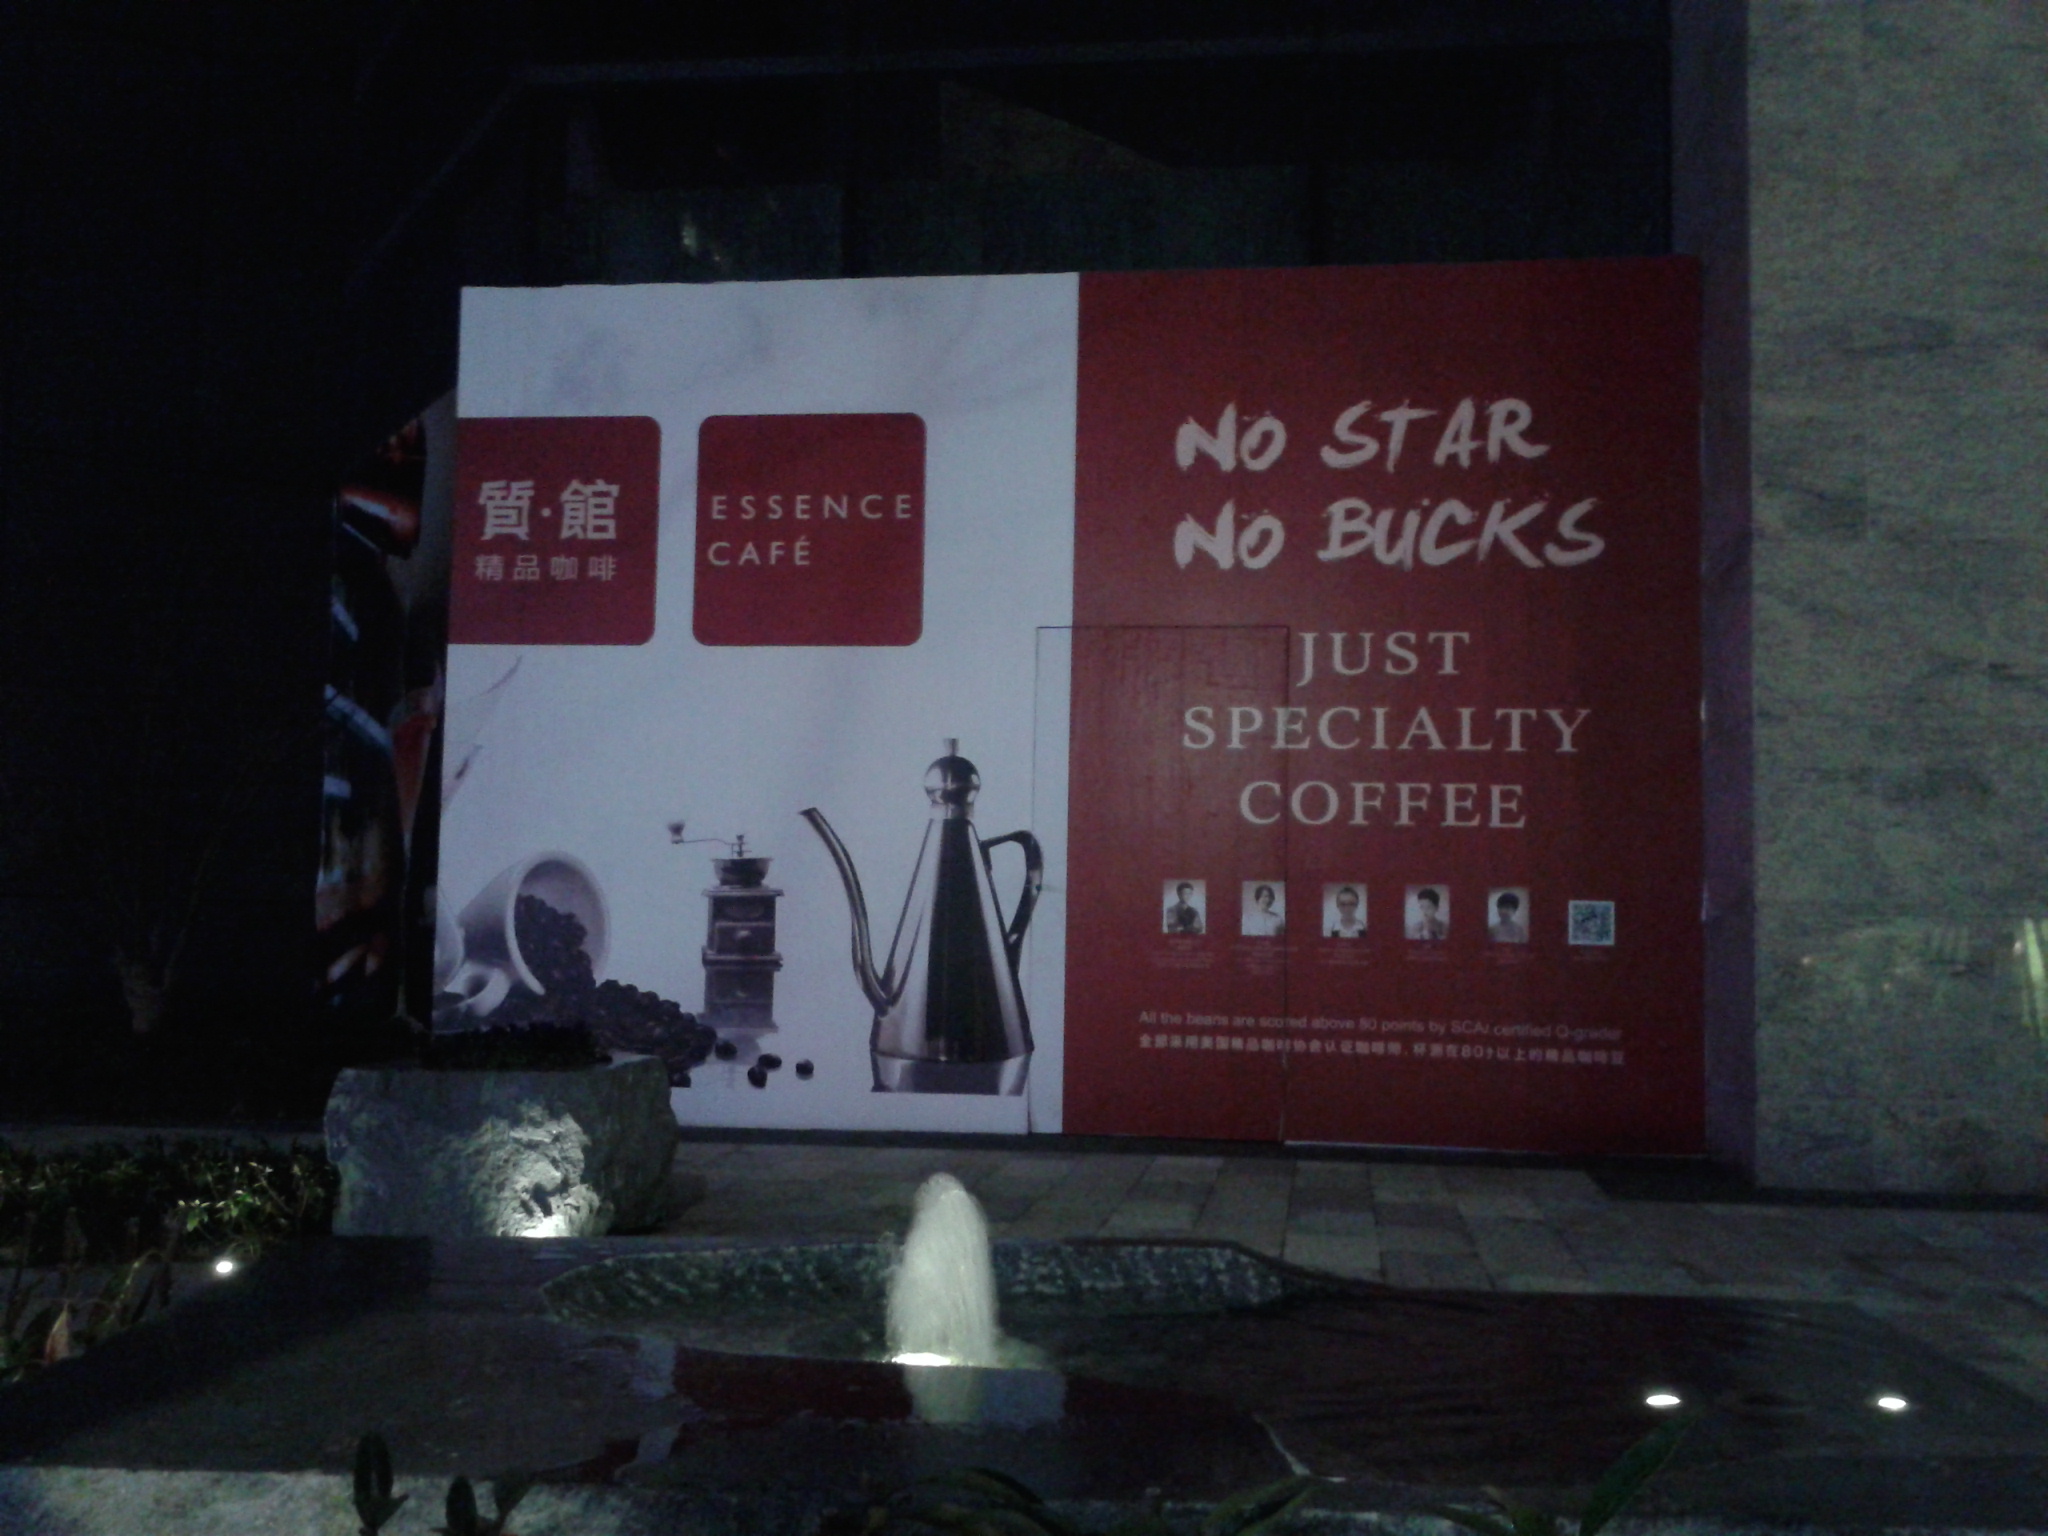 Jó kis reklámszlogen: "No star, no bucks" :D